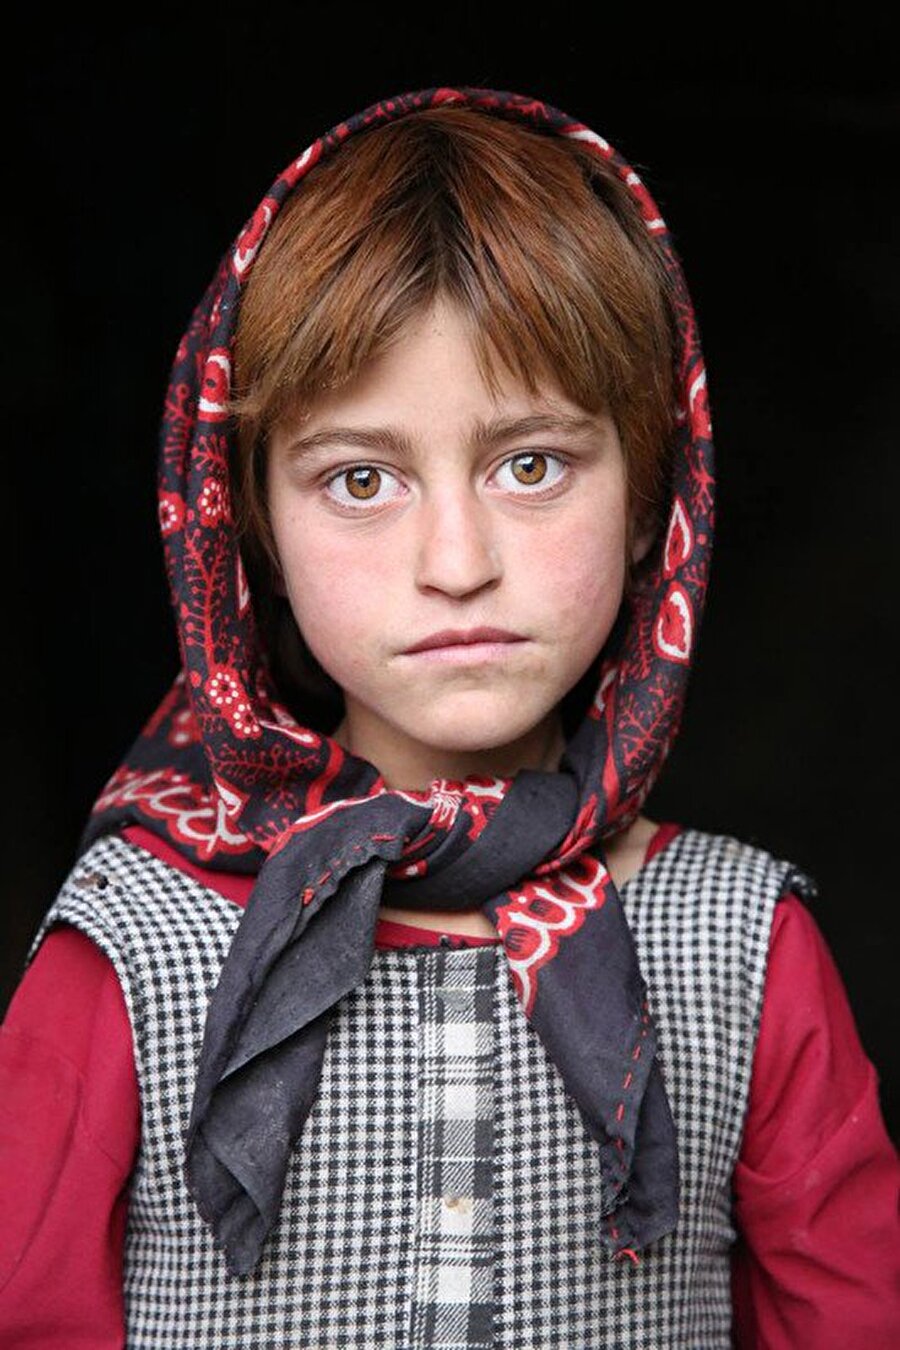 Vahan Vadisi / Afganistan
